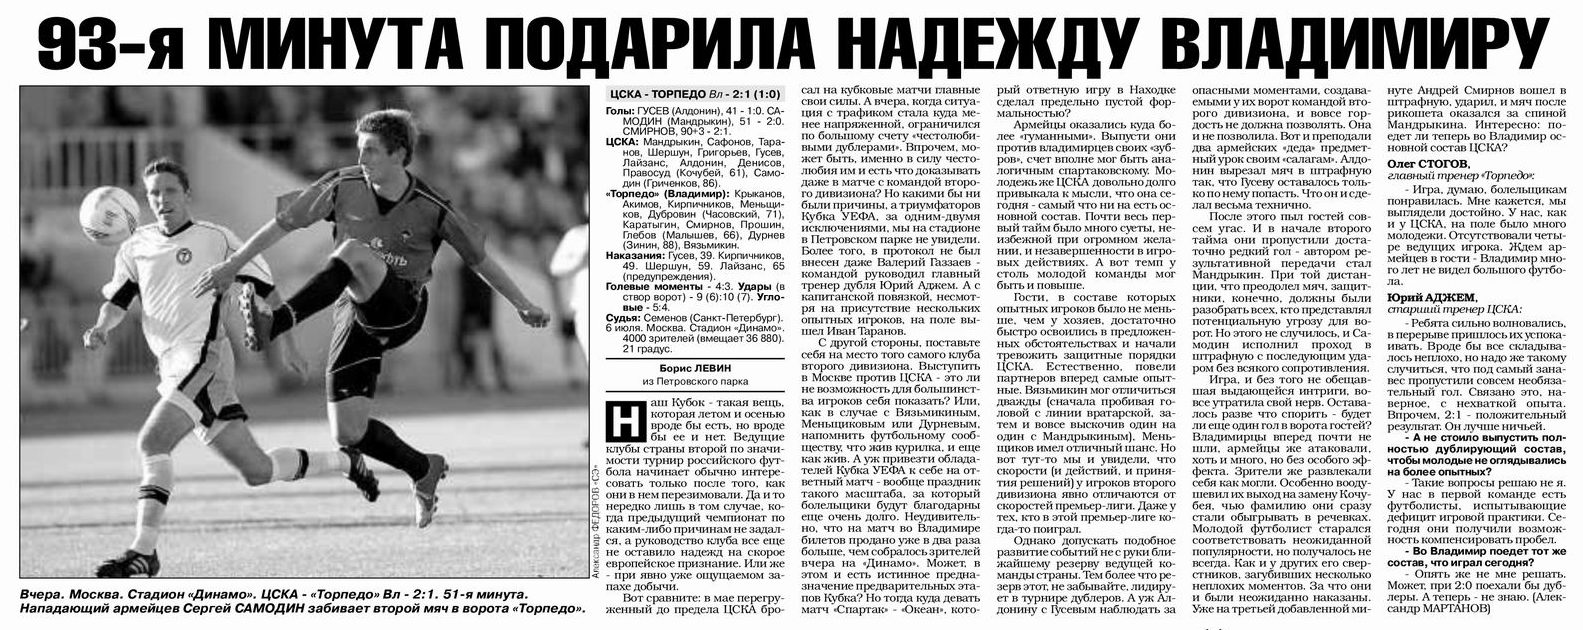 2005-07-06.CSKA-TorpedoVl.1